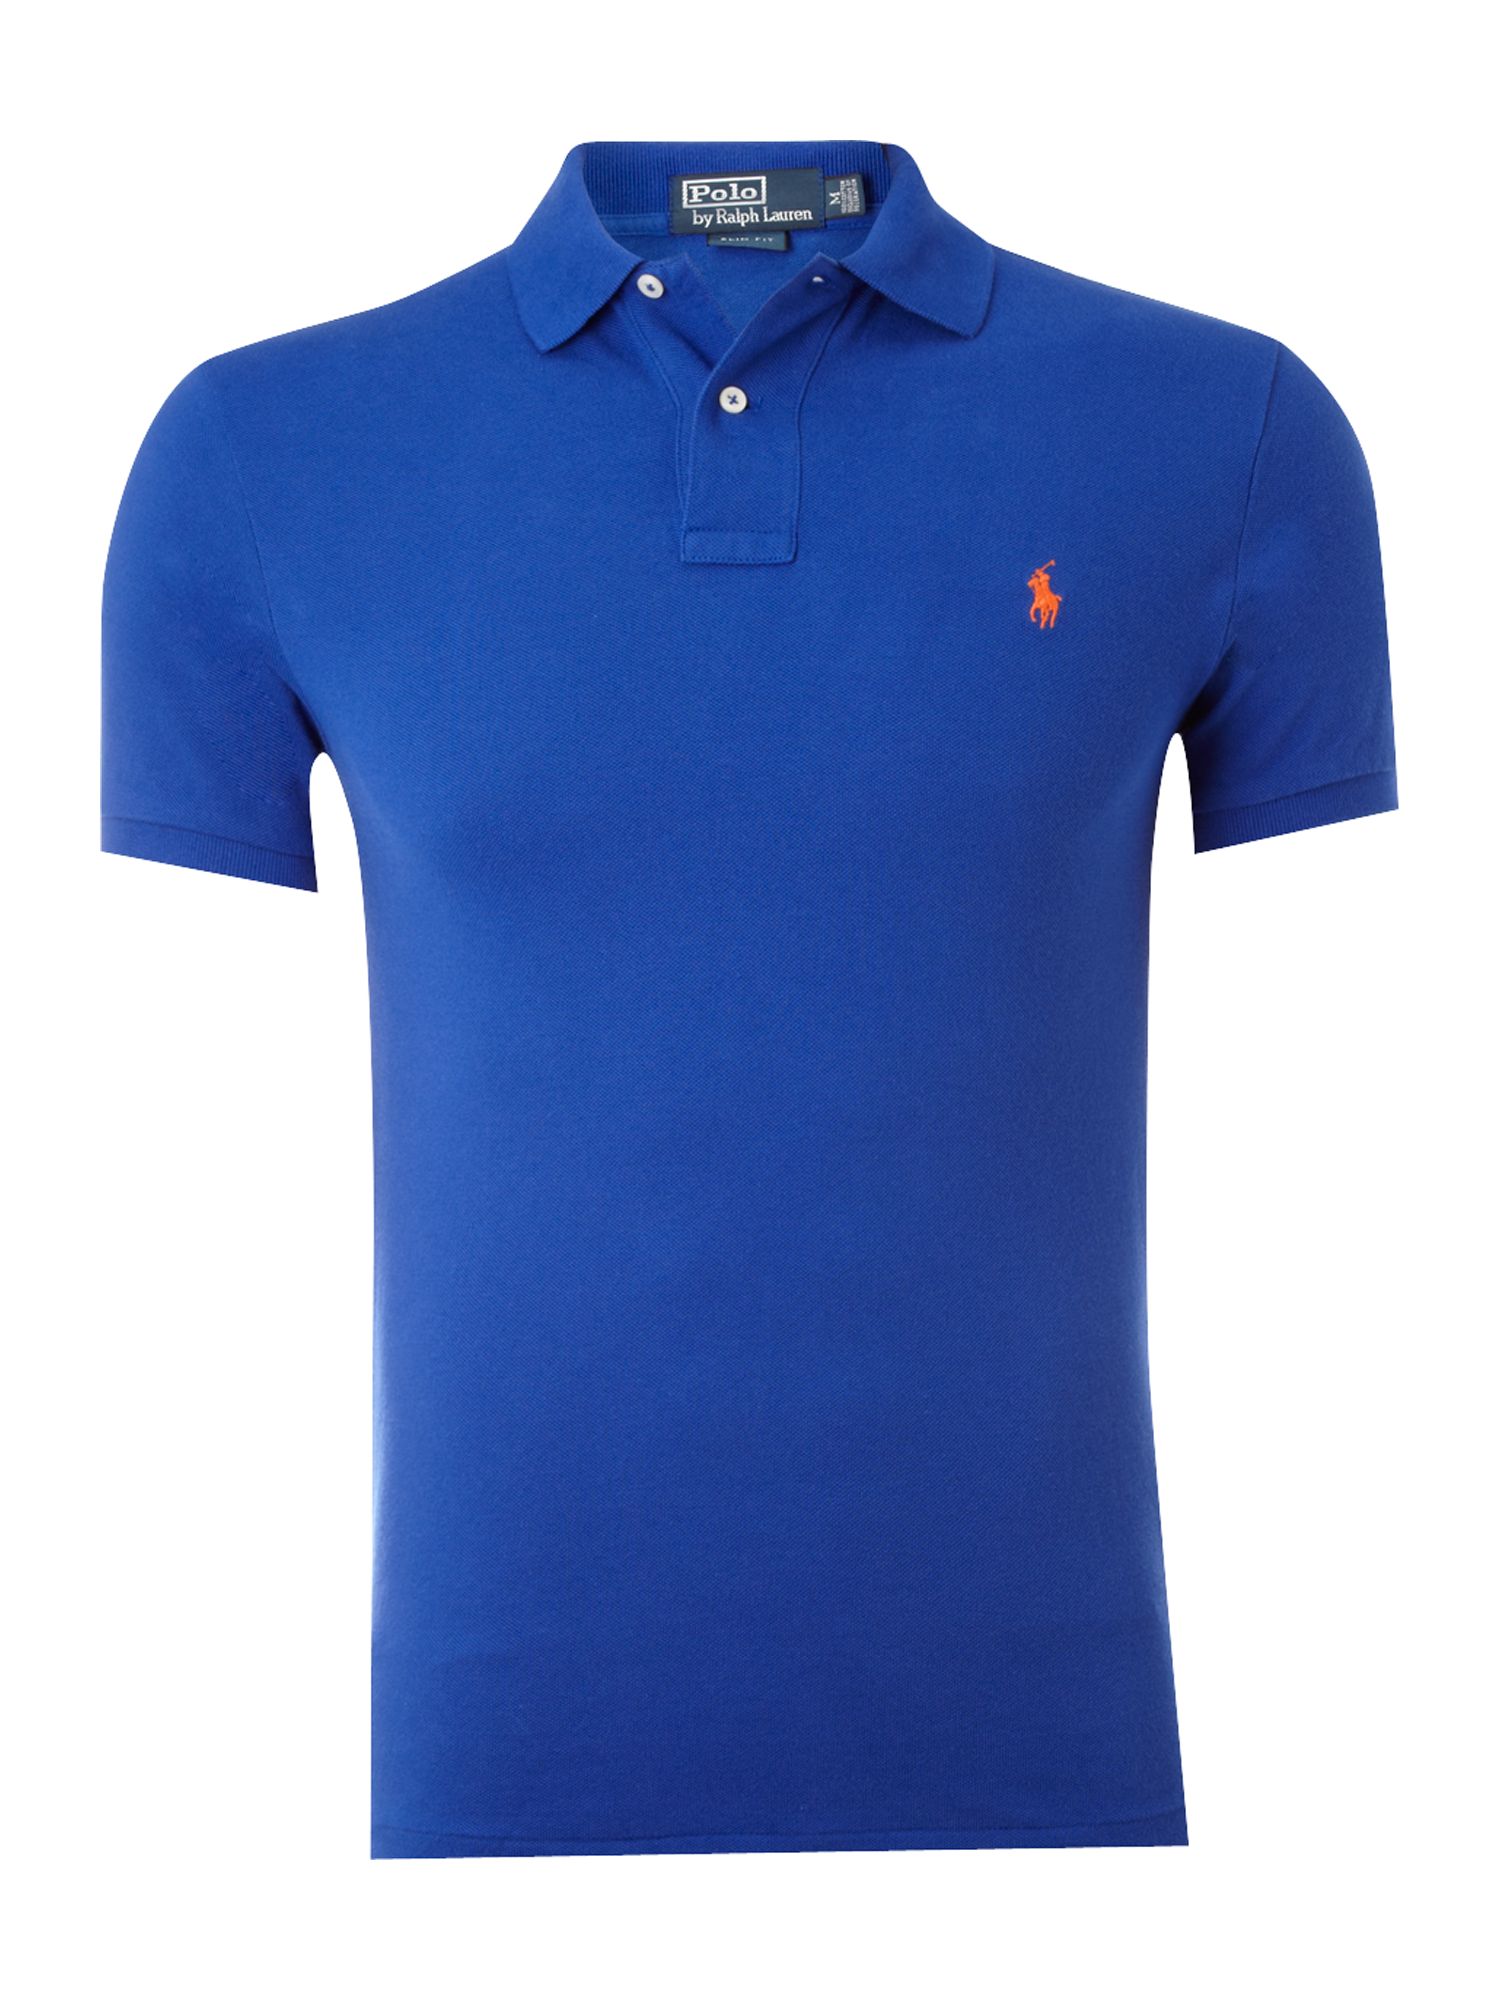 Lyst - Polo Ralph Lauren Royal Blue Polo Shirt in Blue for Men